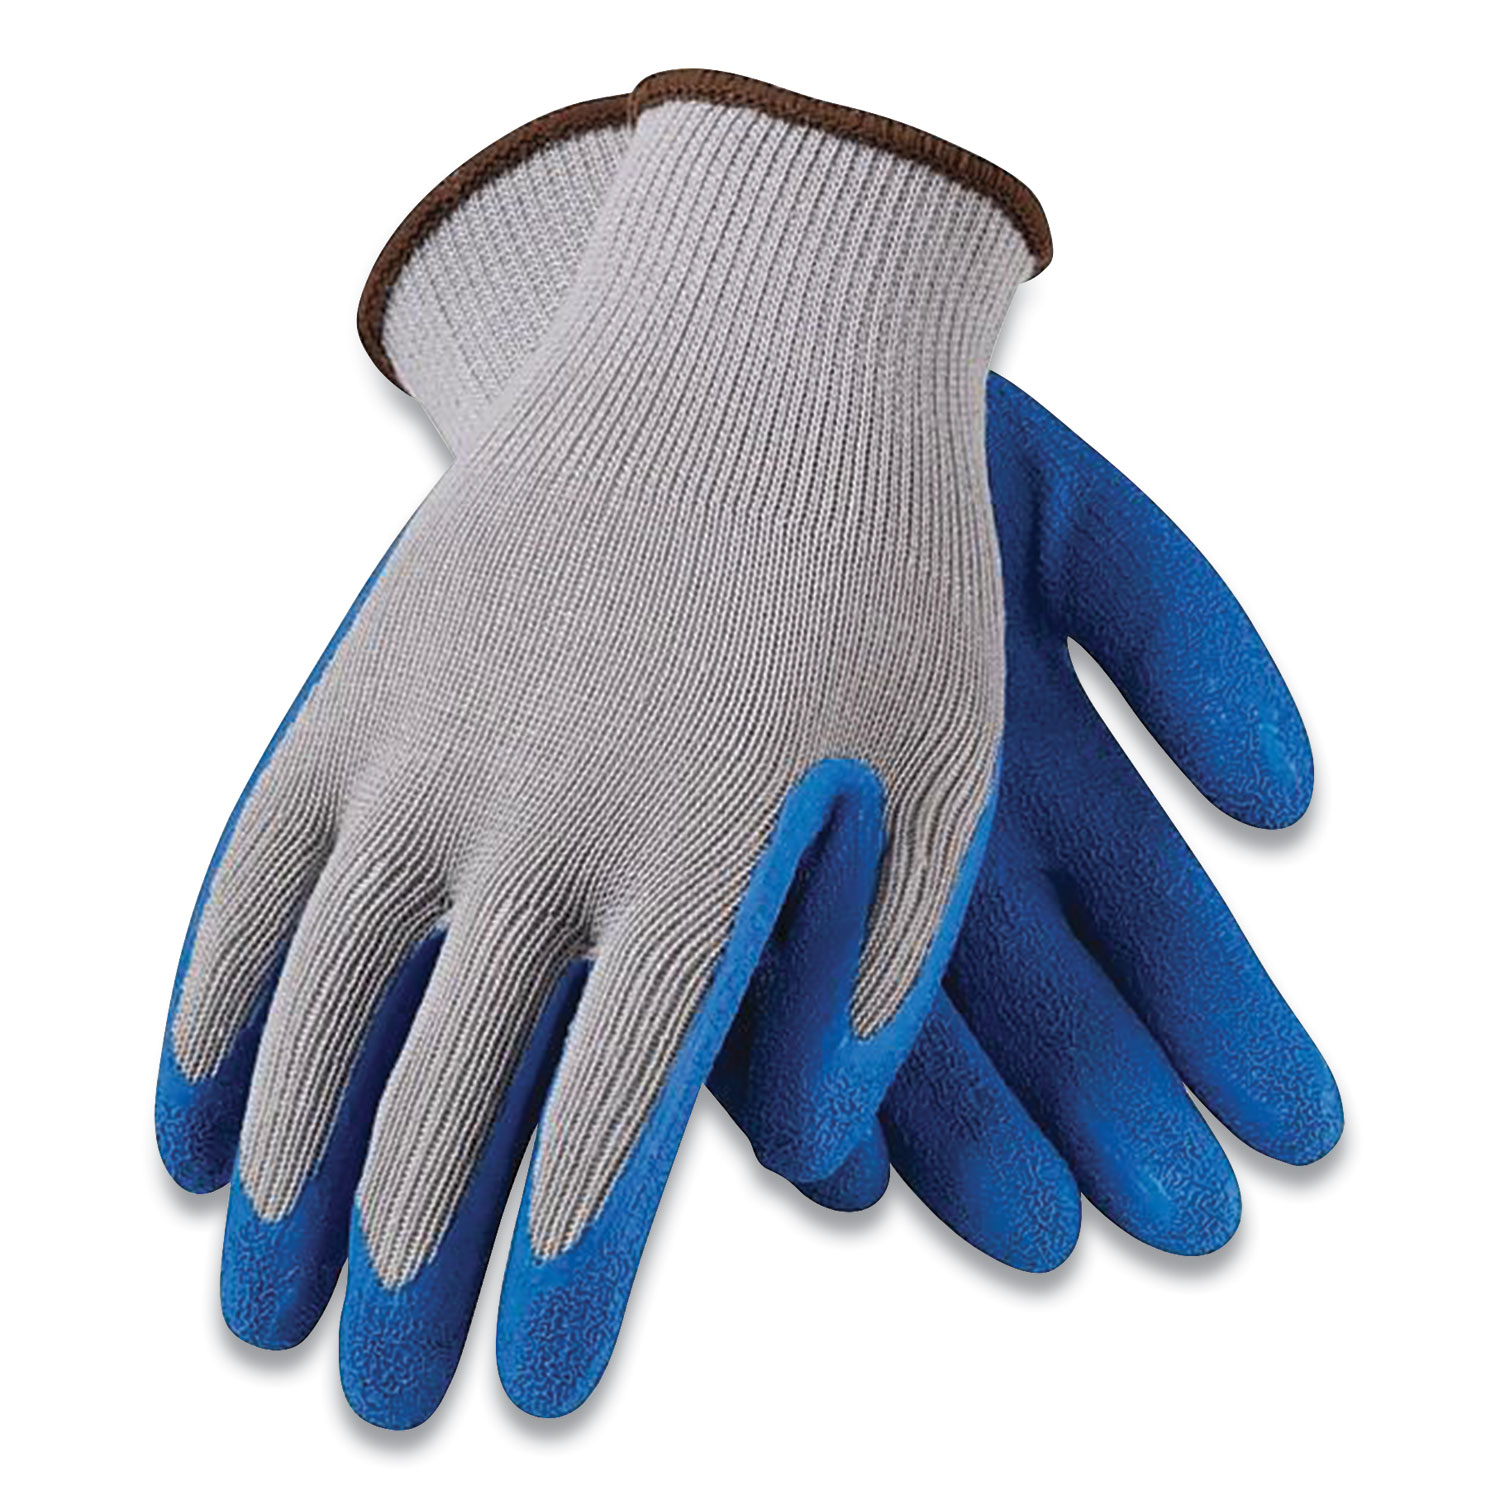  G-Tek 39-1310/M GP Latex-Coated Cotton/Polyester Gloves, Medium, Gray/Blue, 12 Pairs (PID179963) 